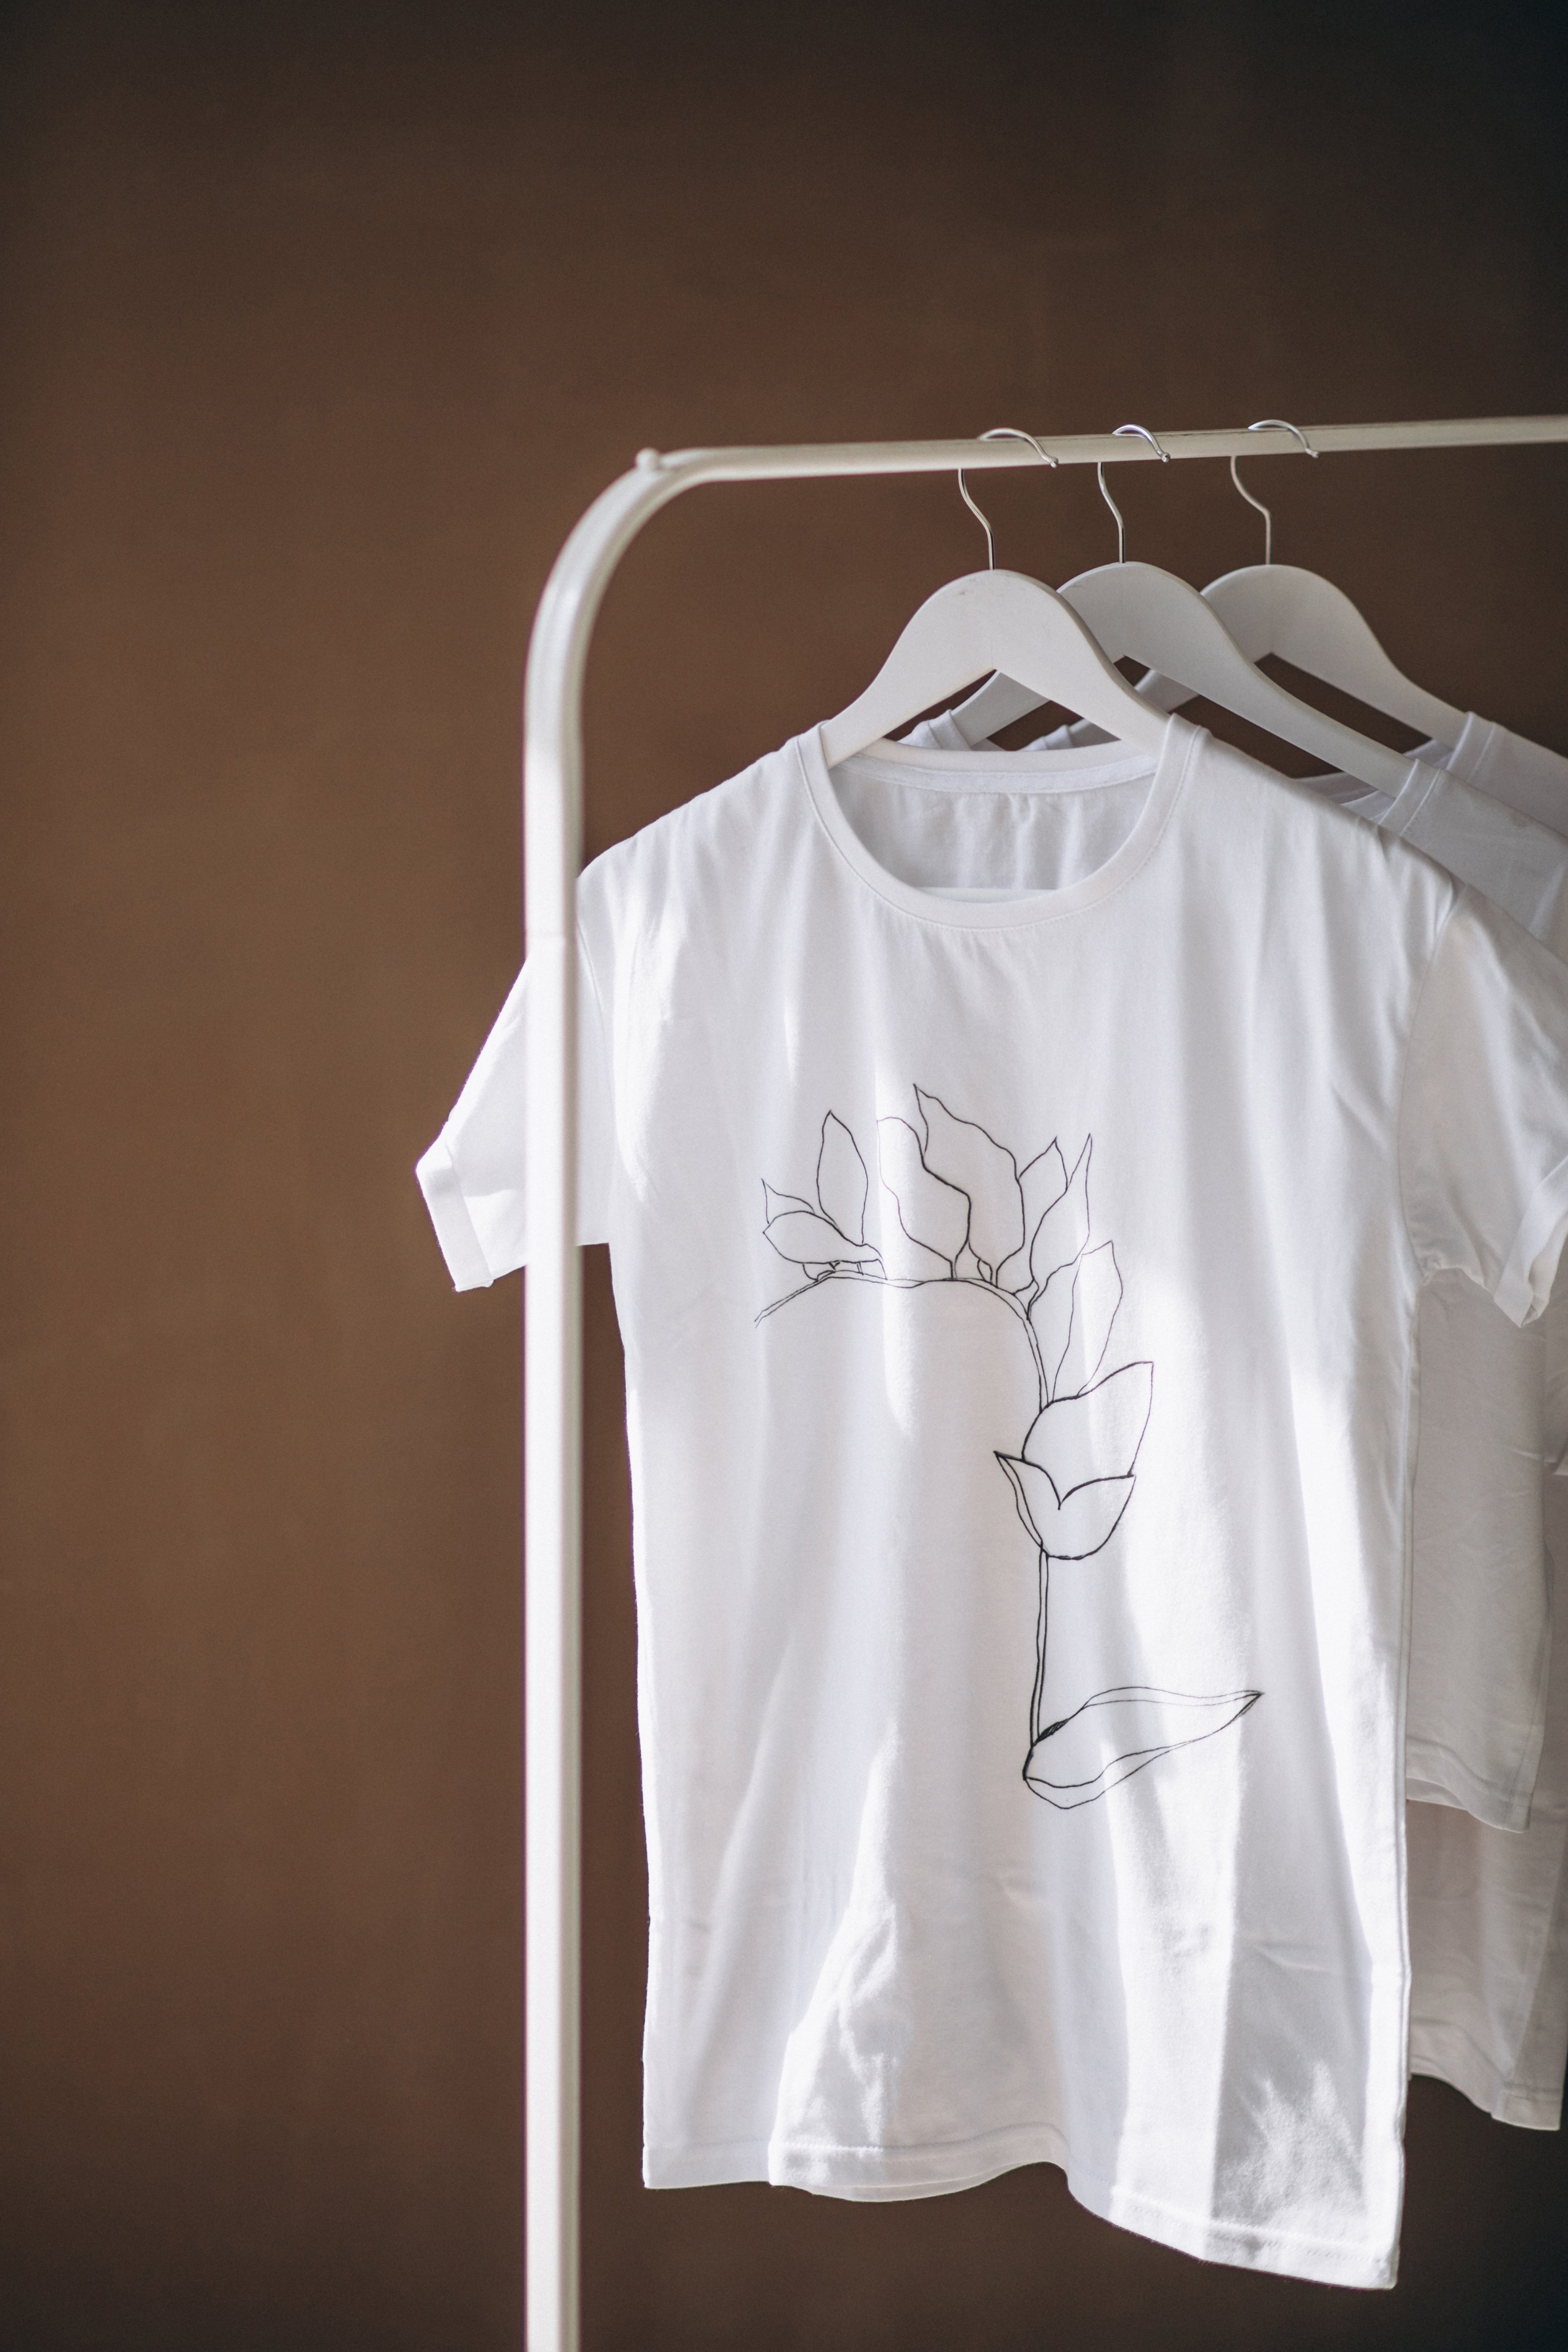 white-shirts-hanging-room